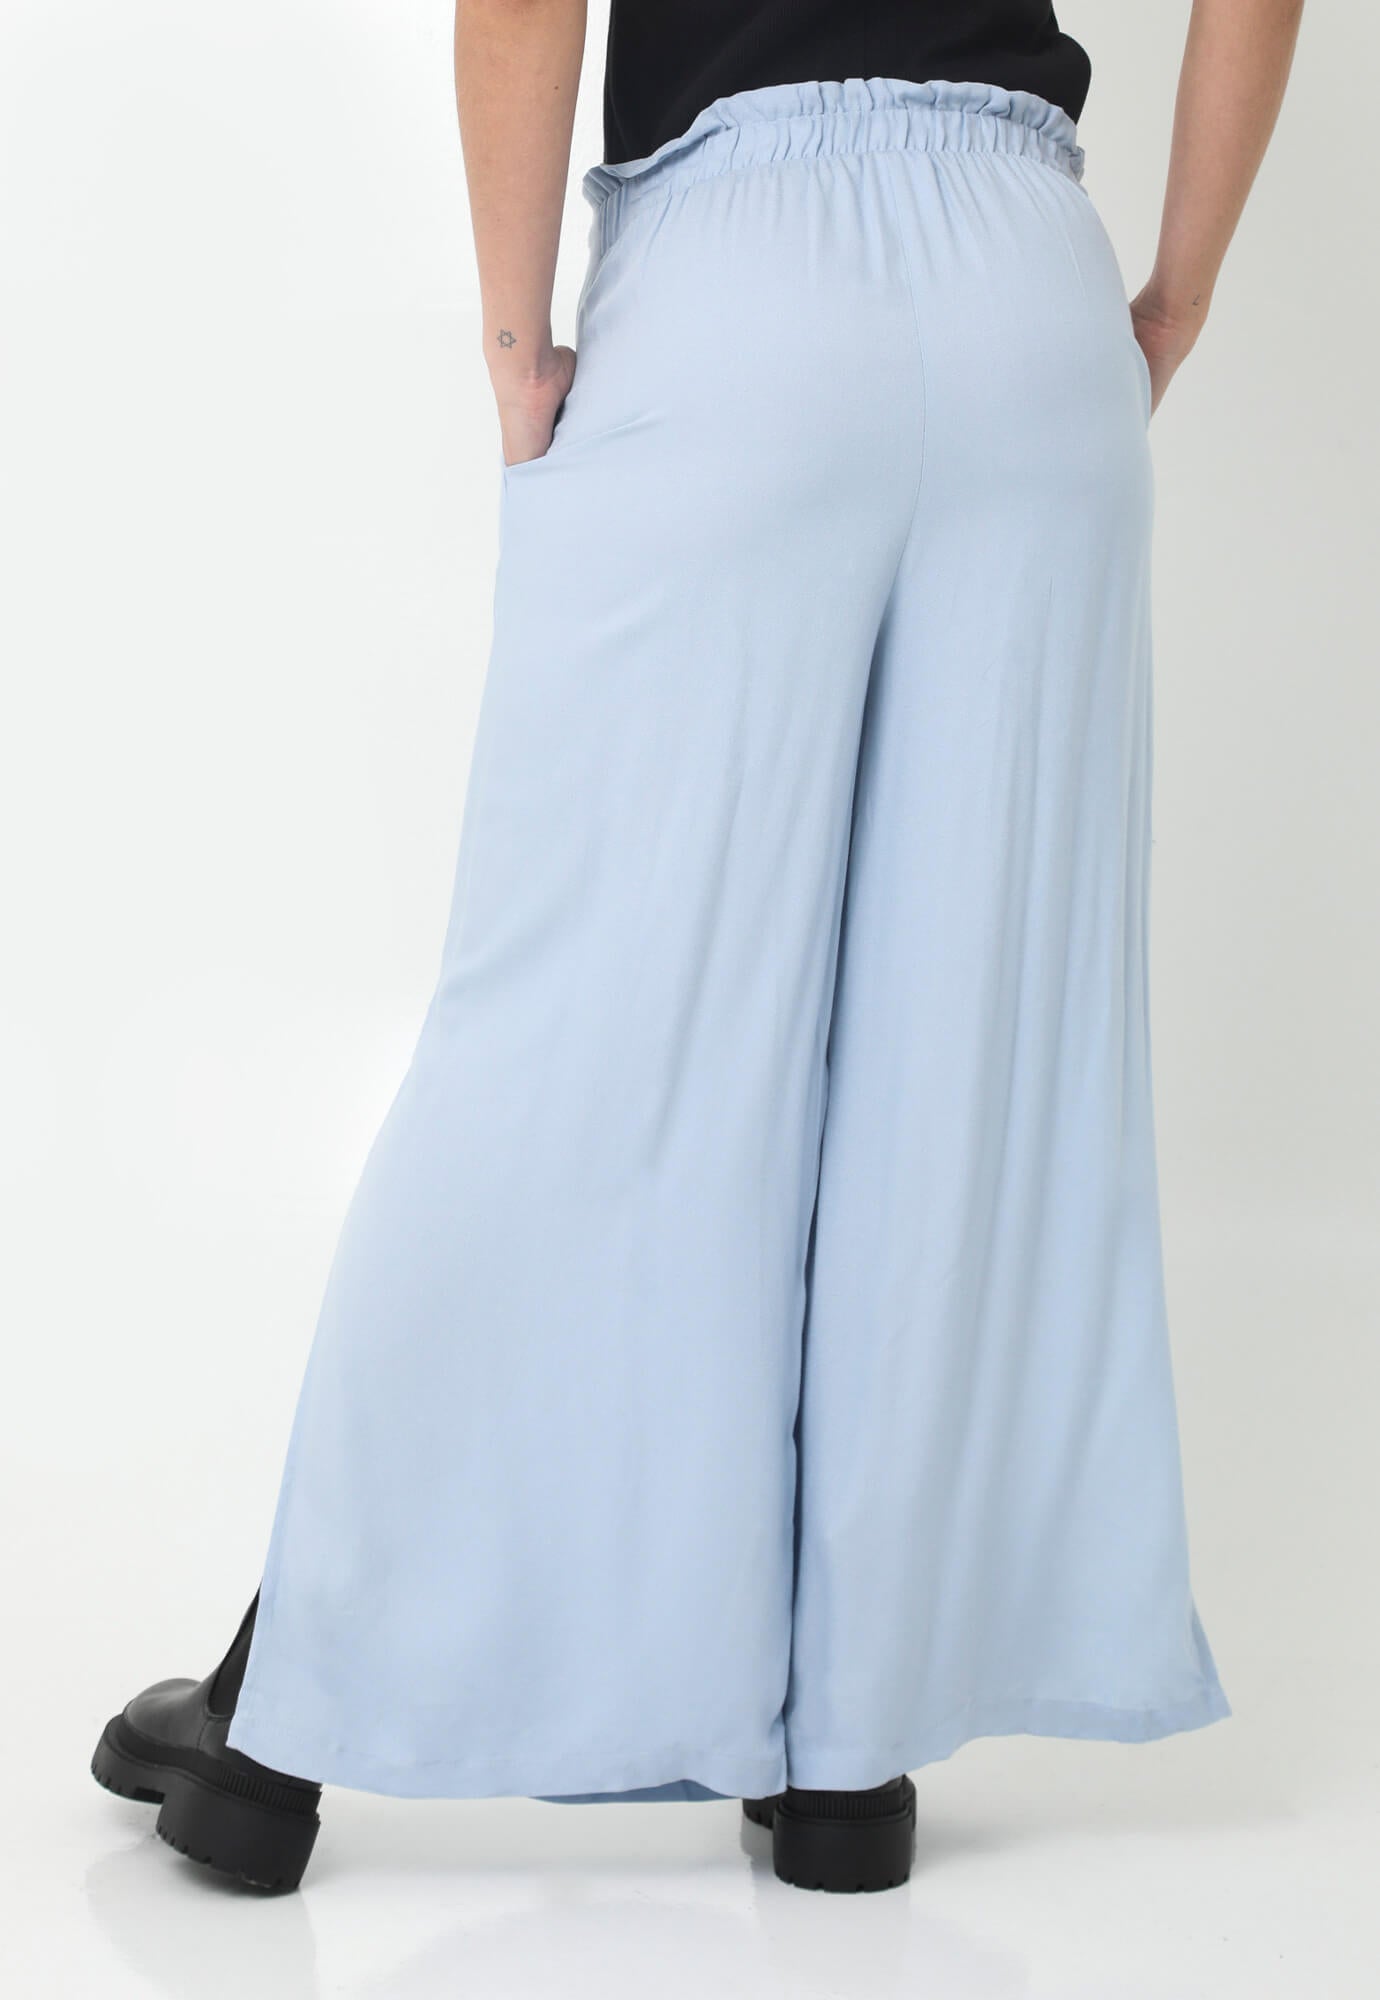 Pantalón azul cobalto con bolsillos frontales y aberturas laterales en bota para mujer